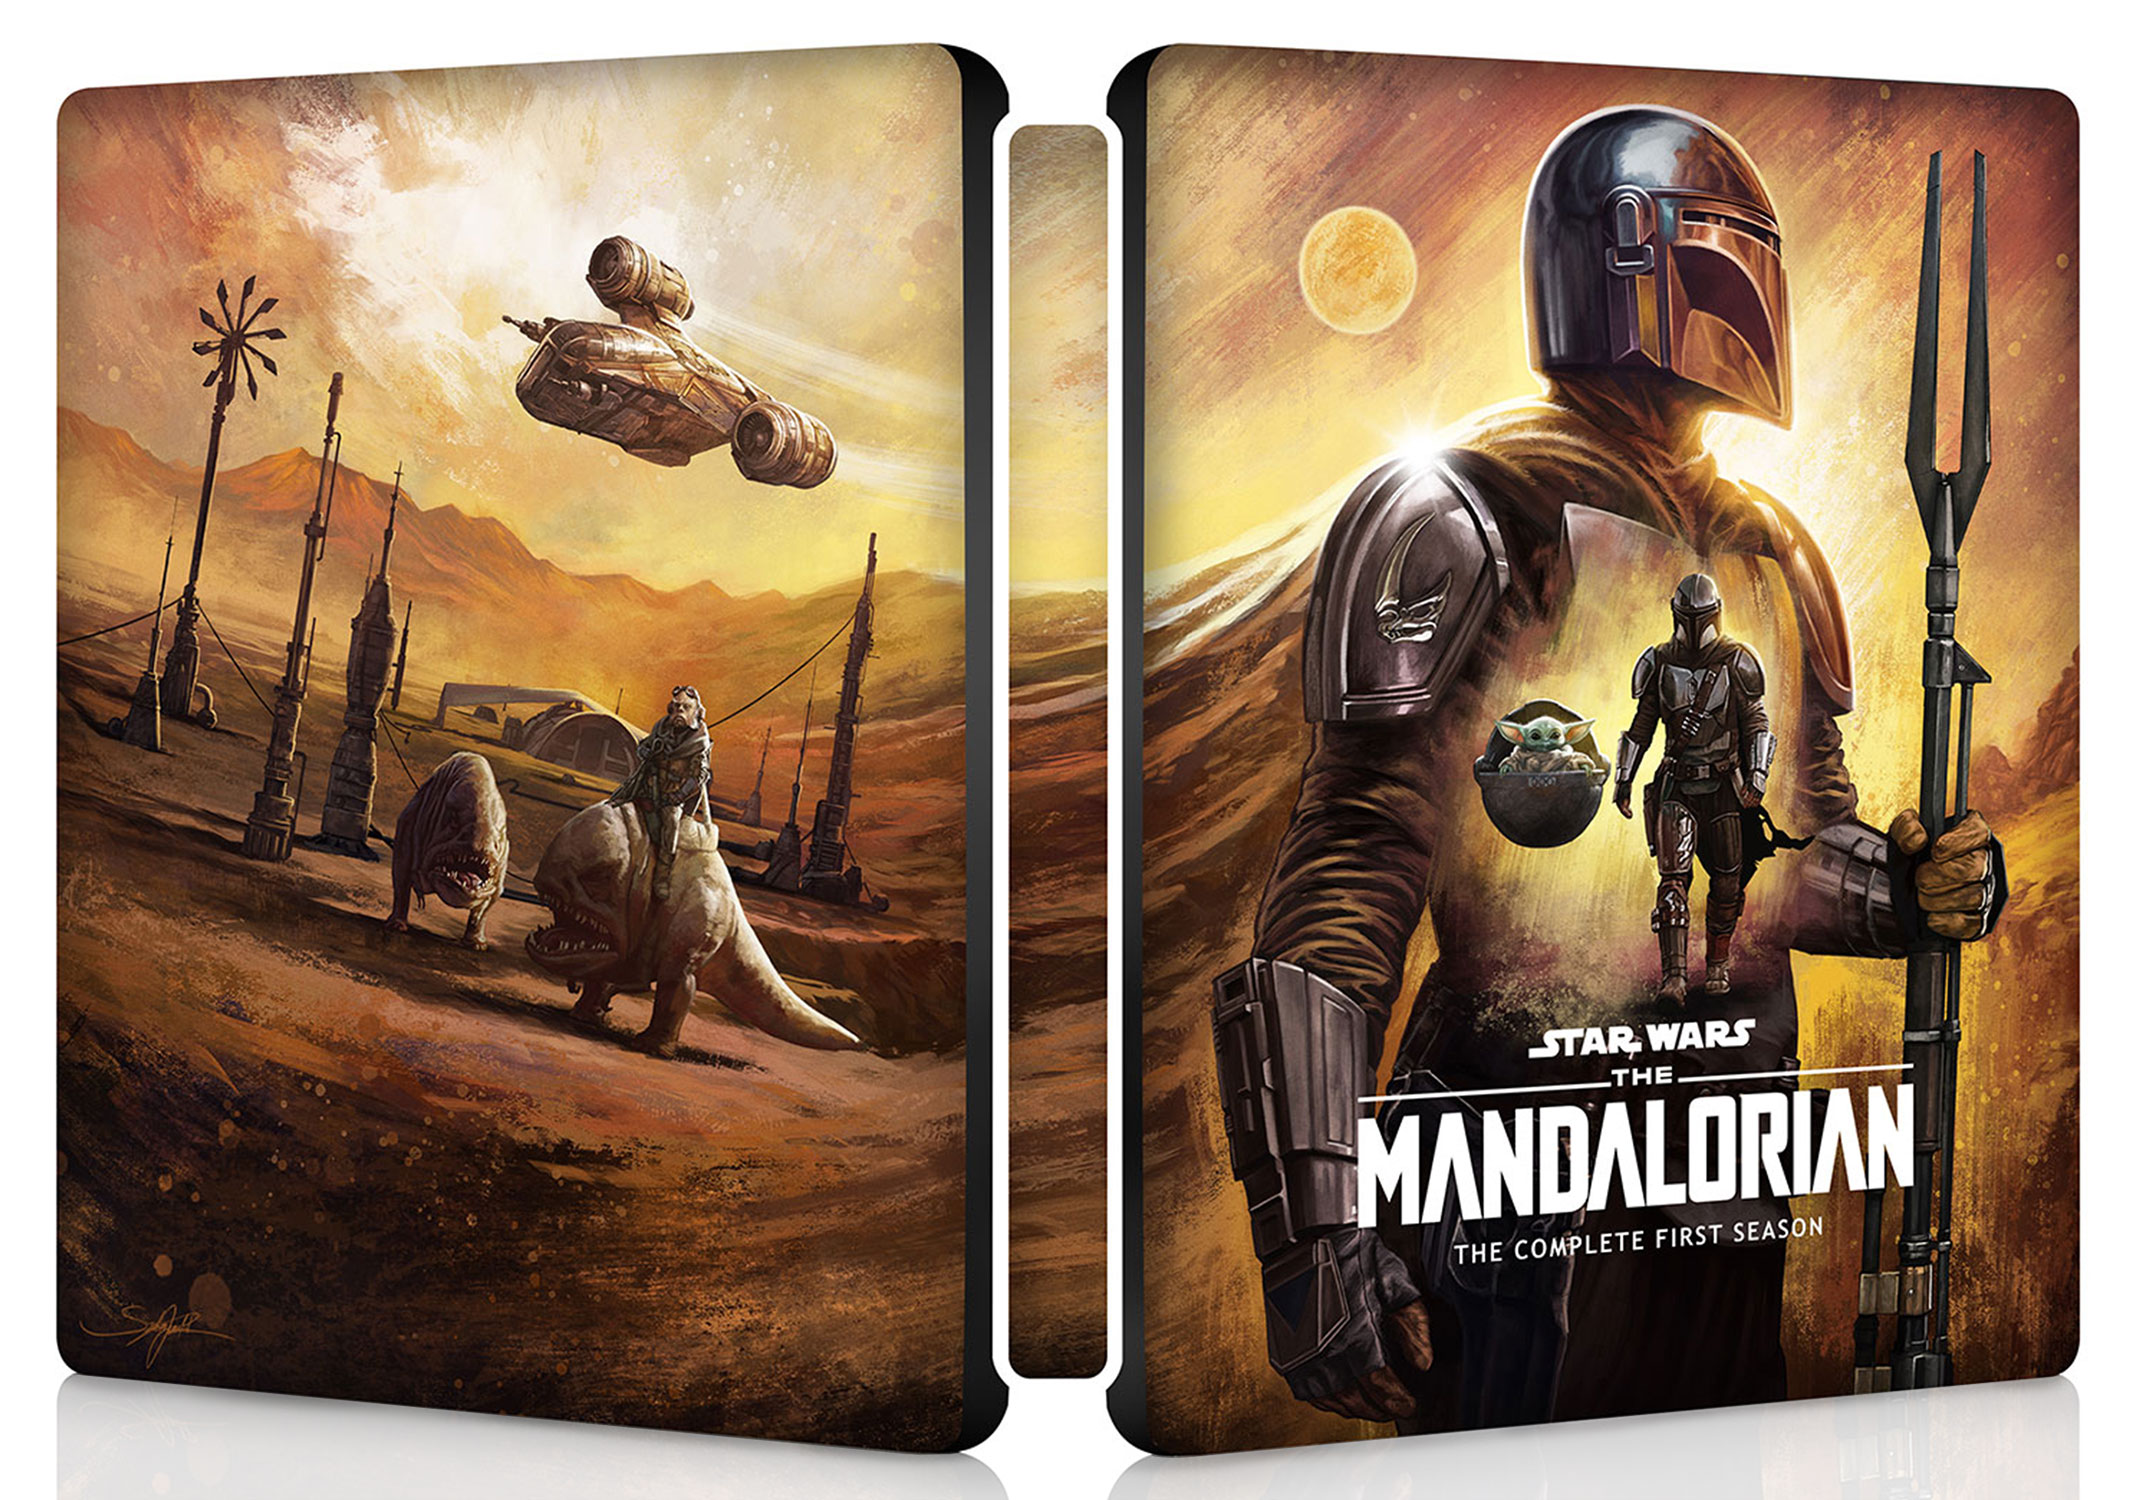 Official Disney +/LucasFilm-Mandalorian S1 Steelbook